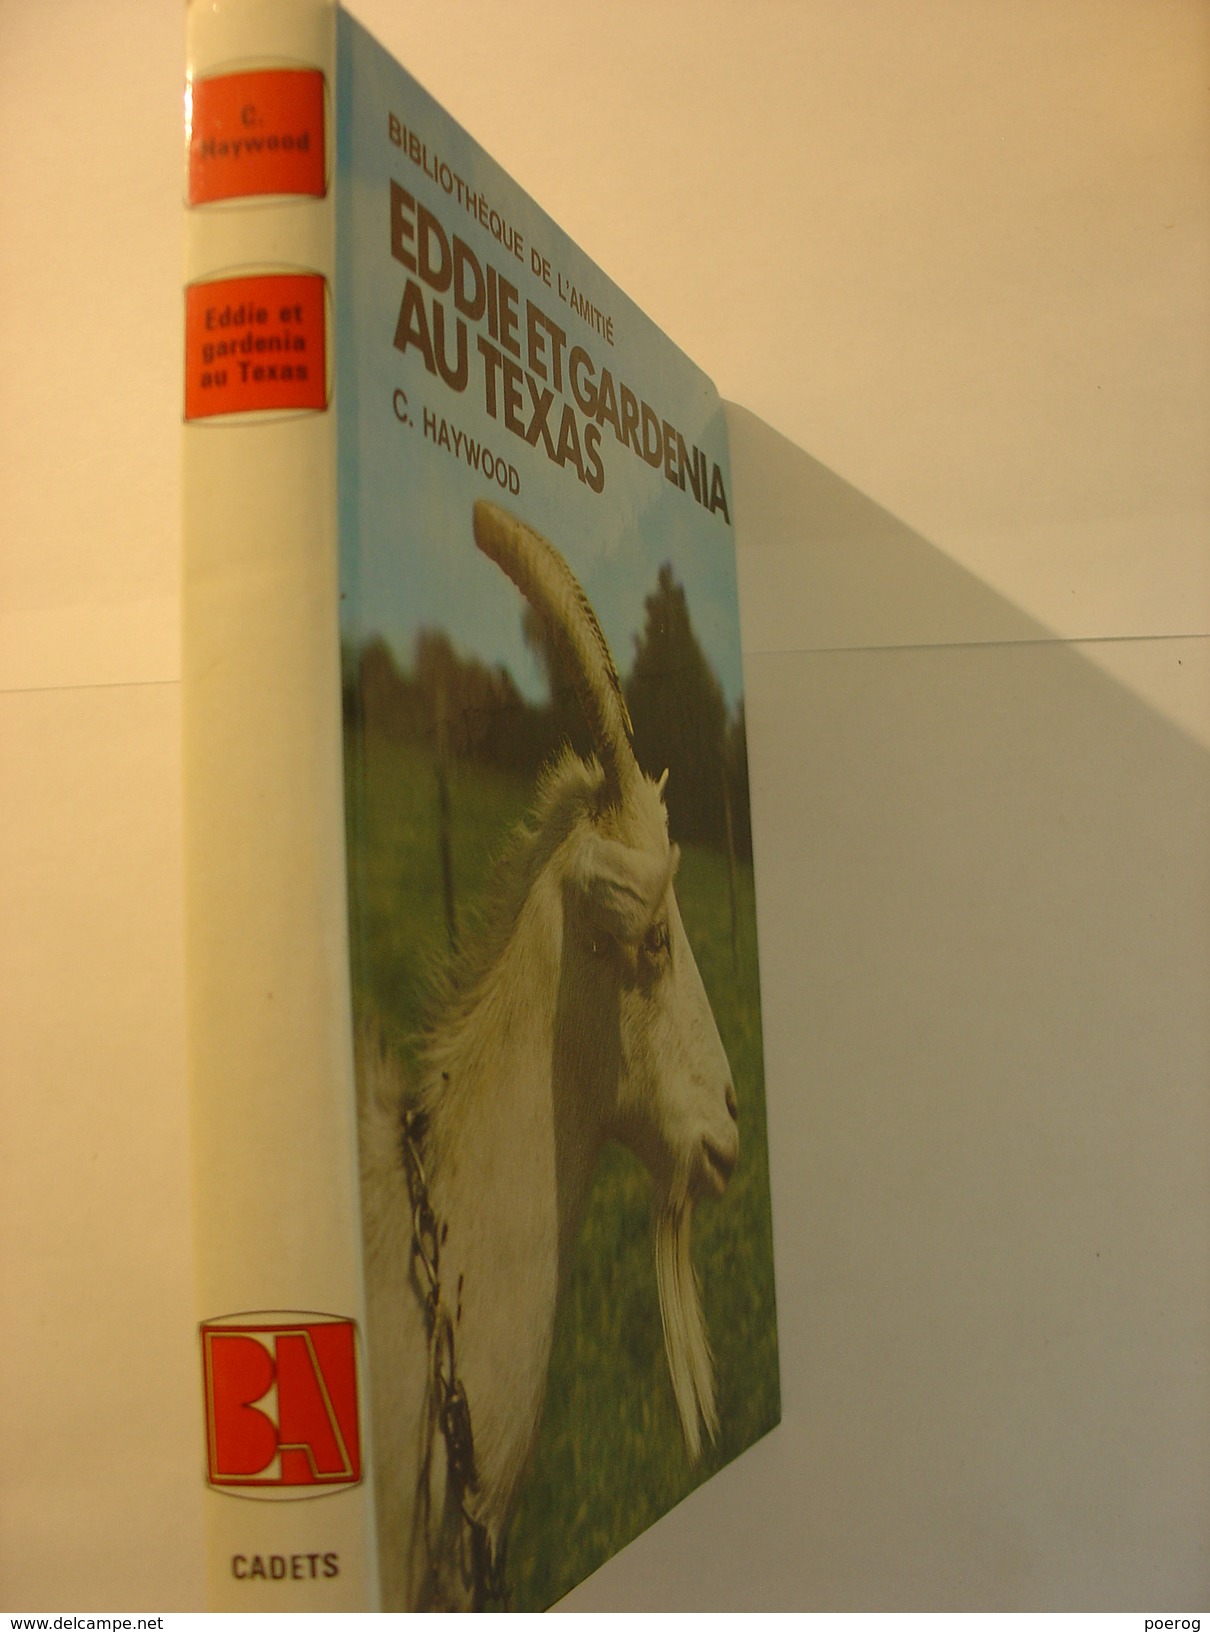 EDDIE ET GARDENIA AU TEXAS - C. HAYWOOD - Bibliothèque De L' Amitié - 1976 - Illustrations HARISPE - Chèvre - Bibliotheque De L'Amitie